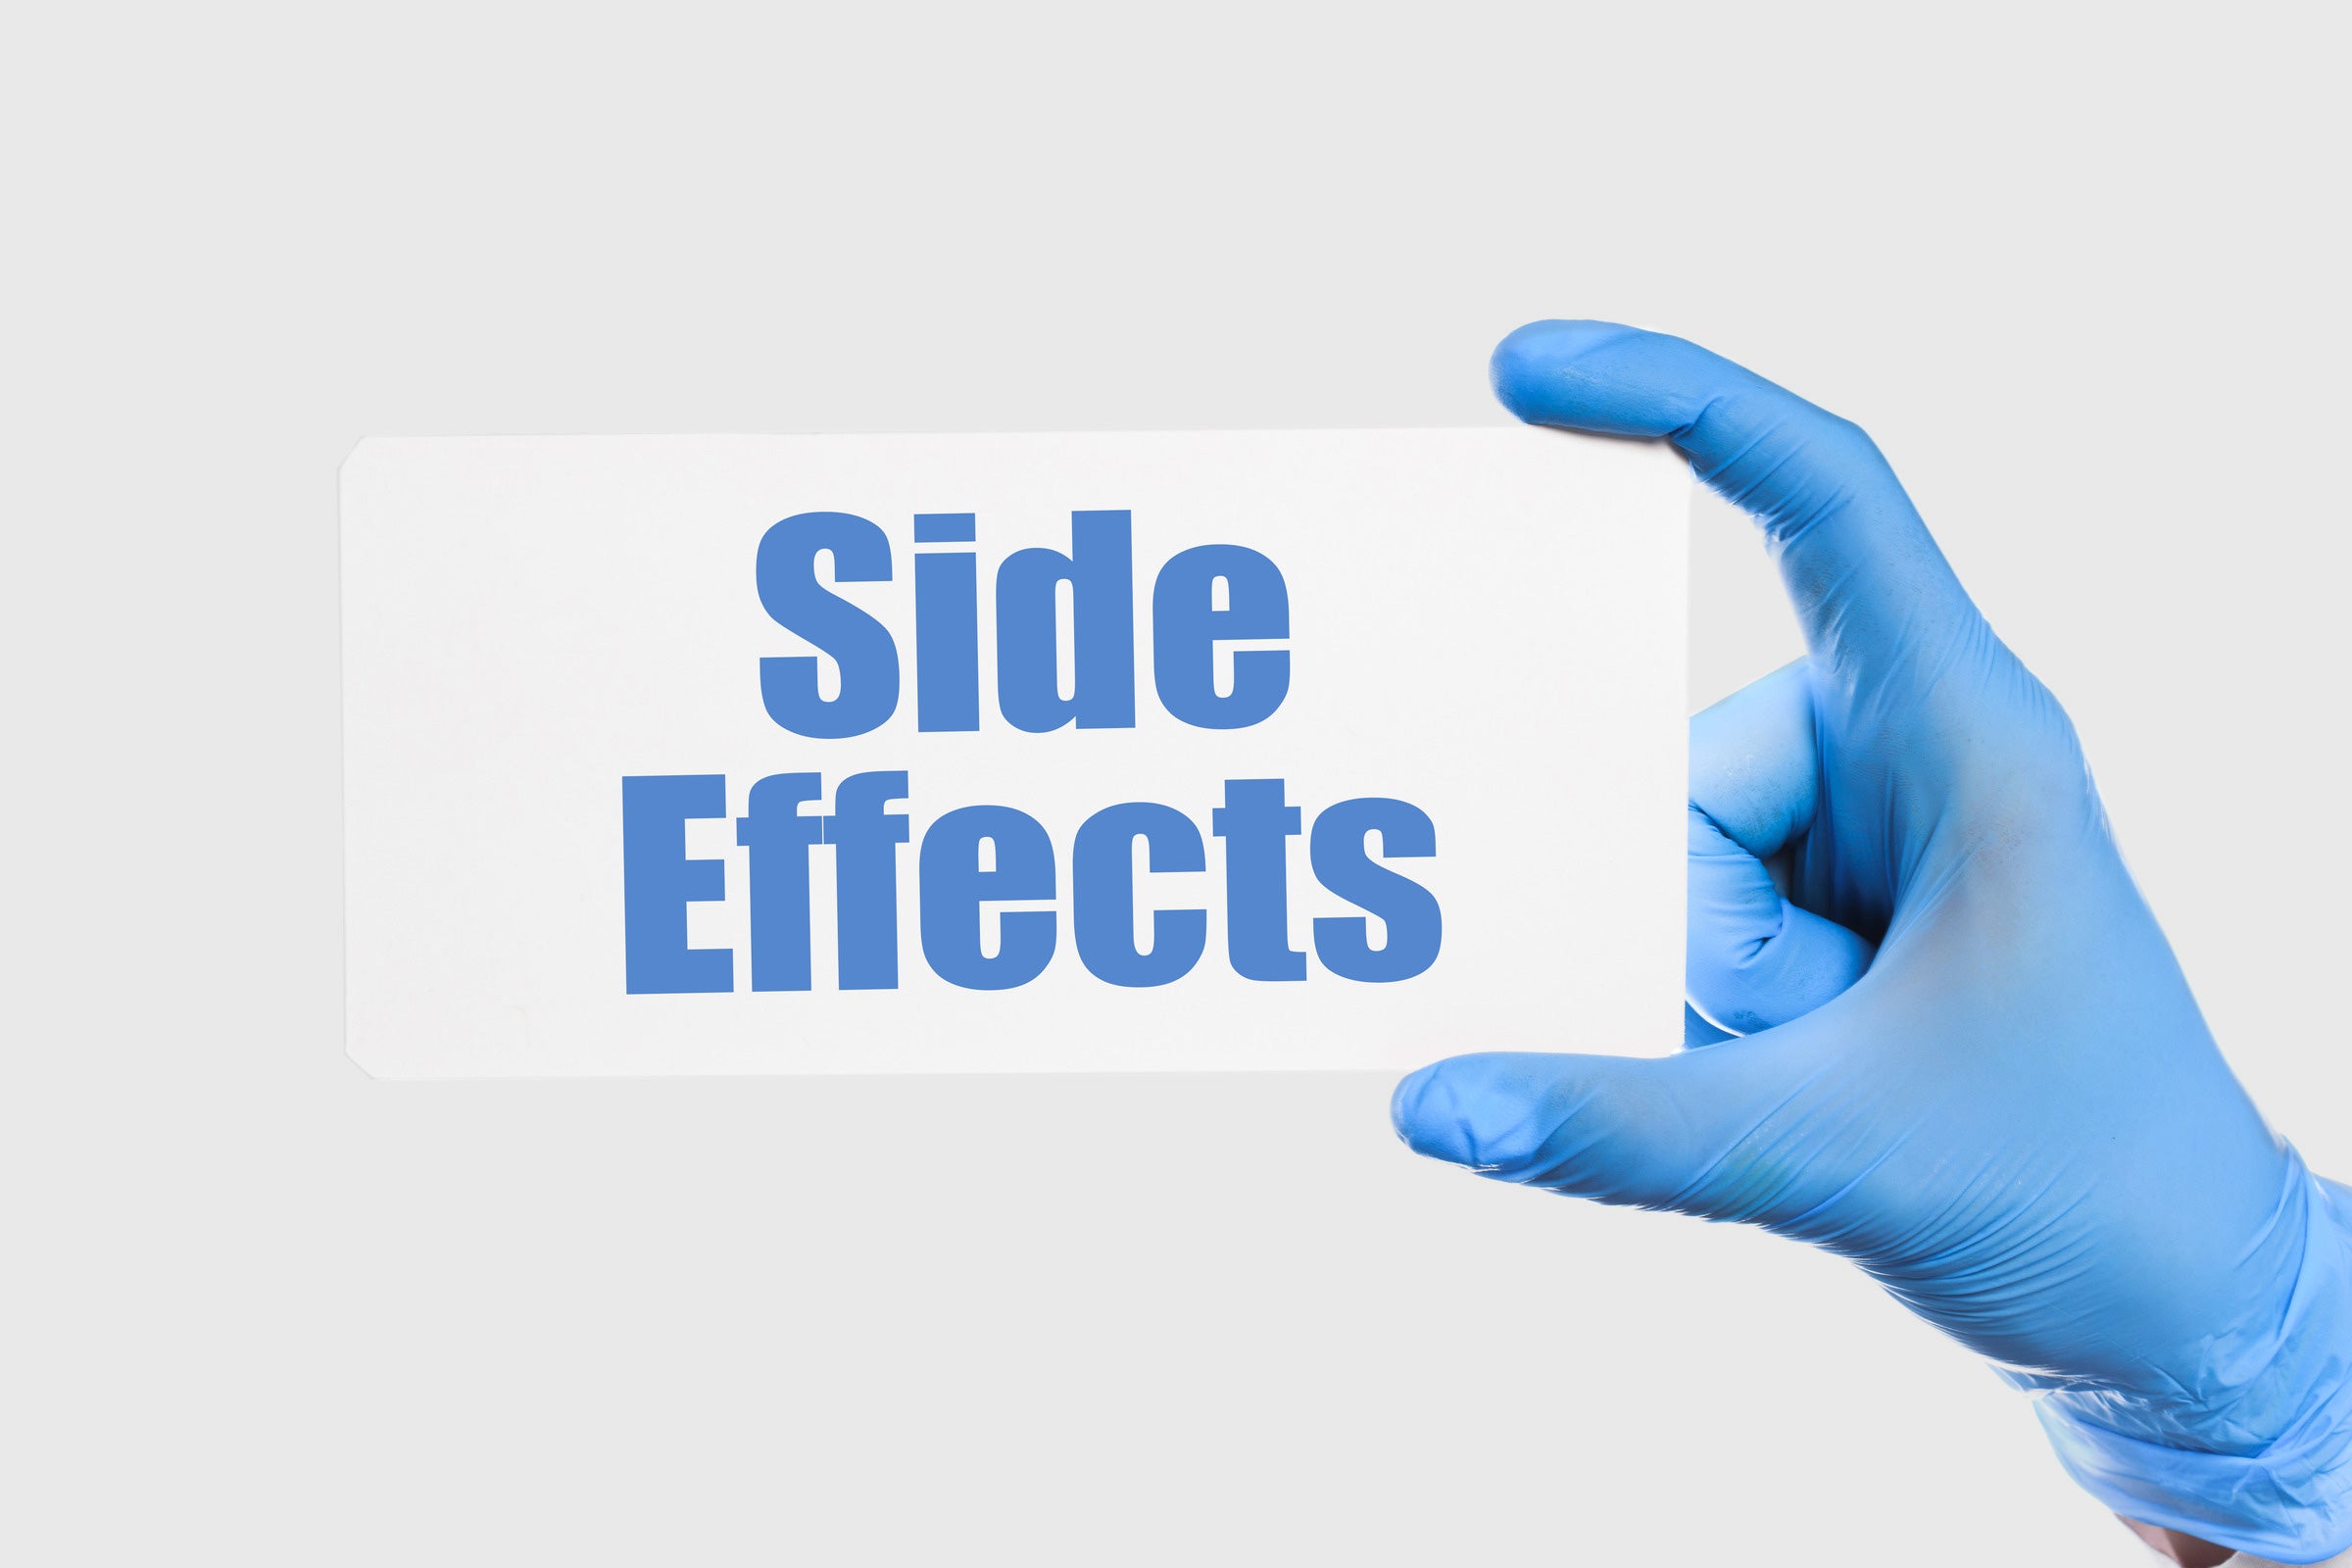 Common side effects of Lidocaine Hemorrhoid Medication